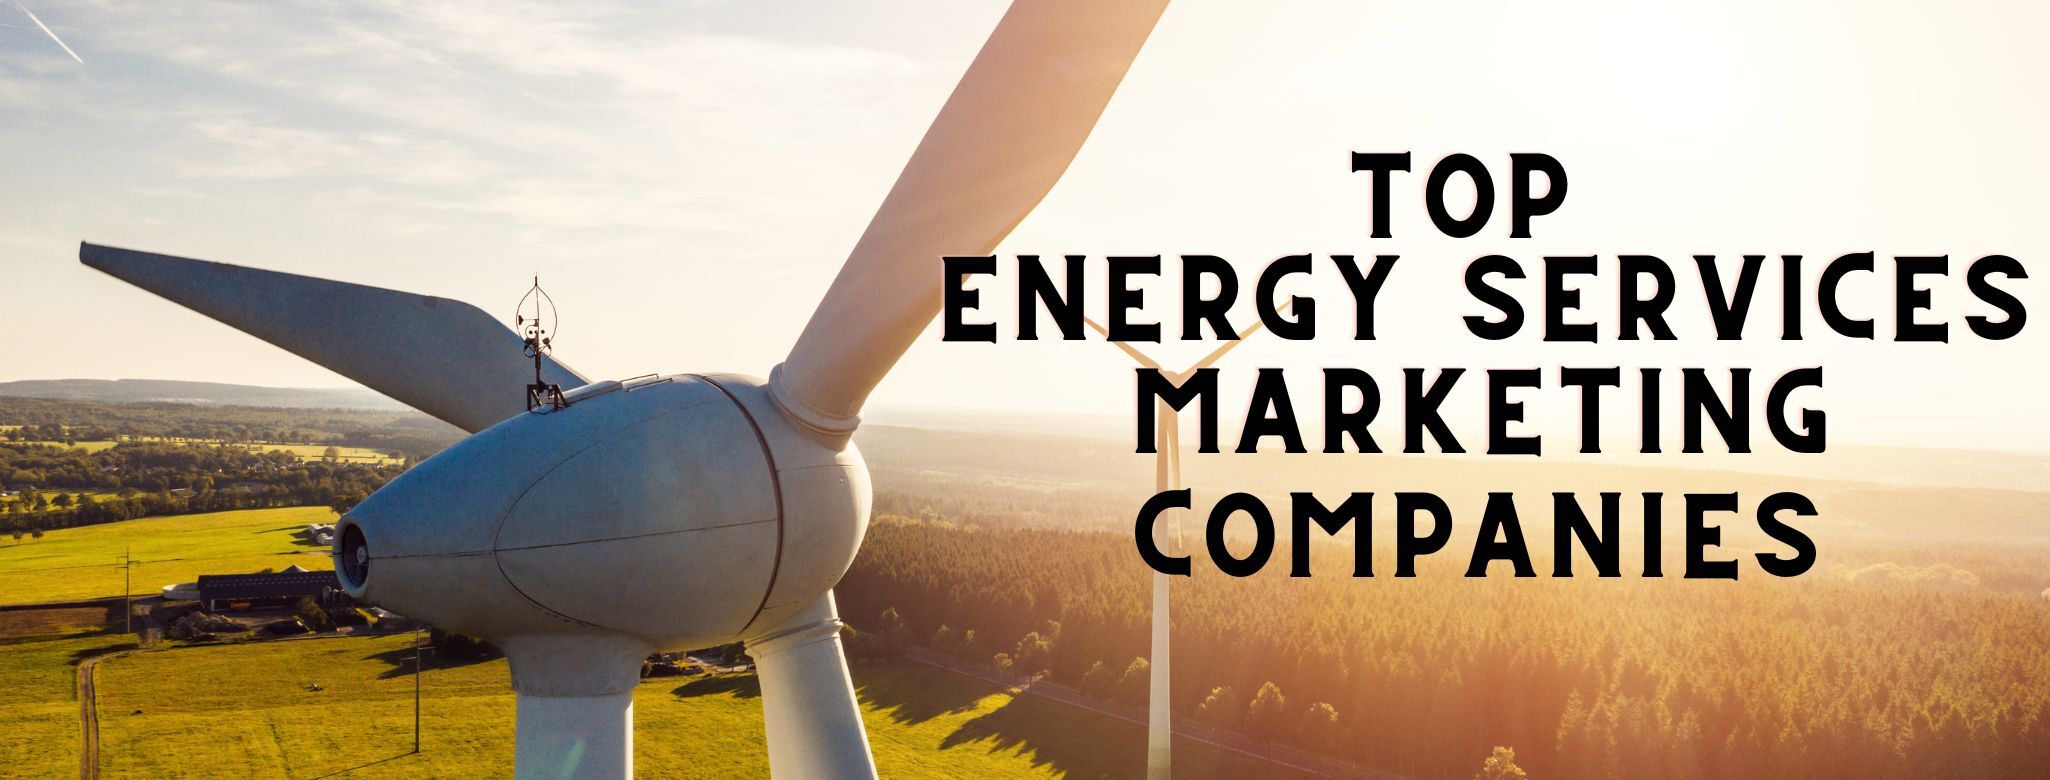 energy services marketing companies